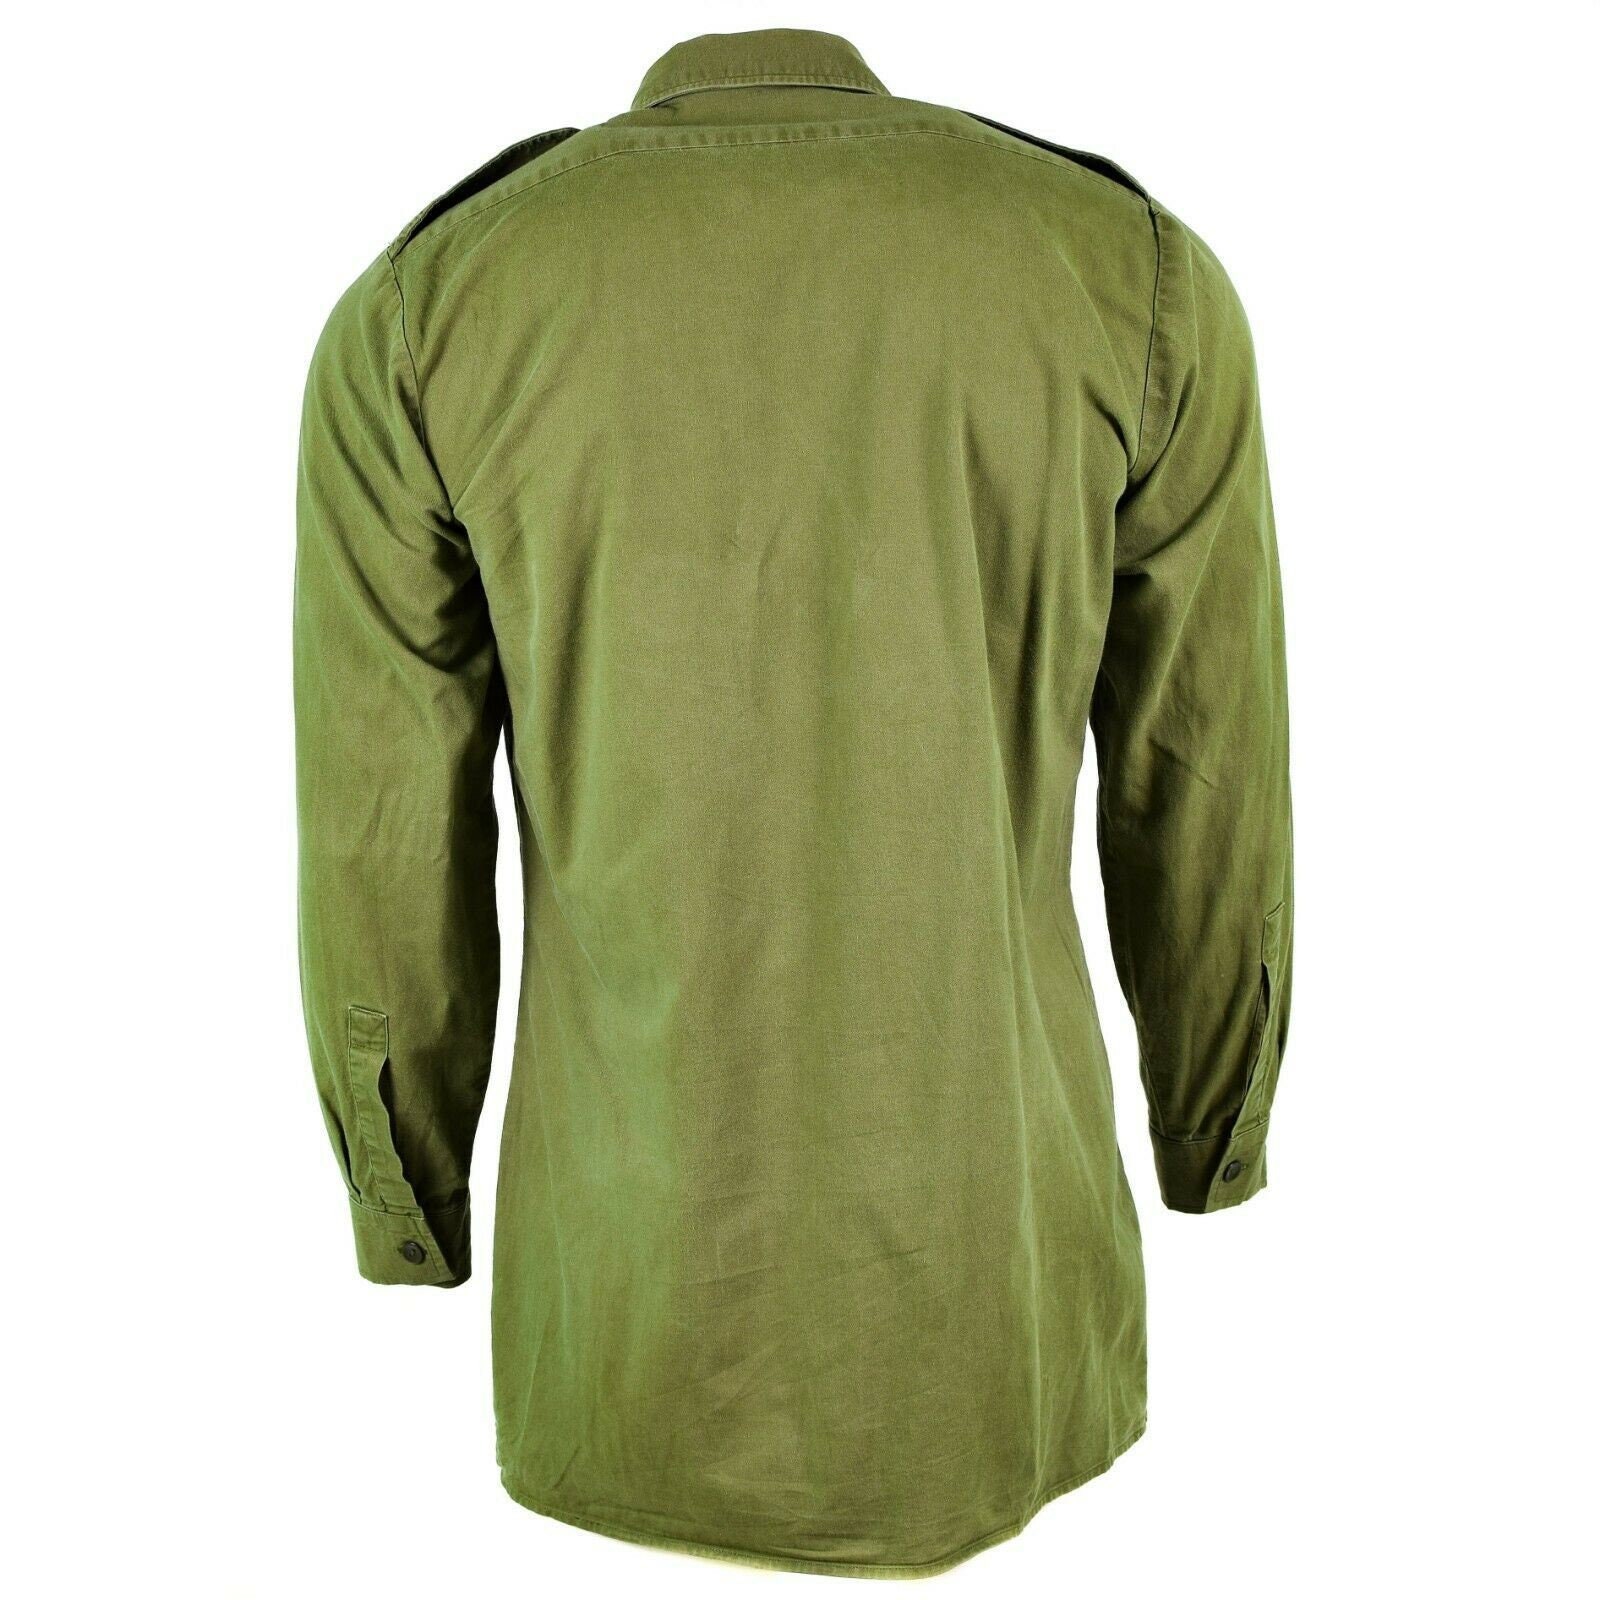 Genuine British army shirt O.D Green Military service long sleeve BDU